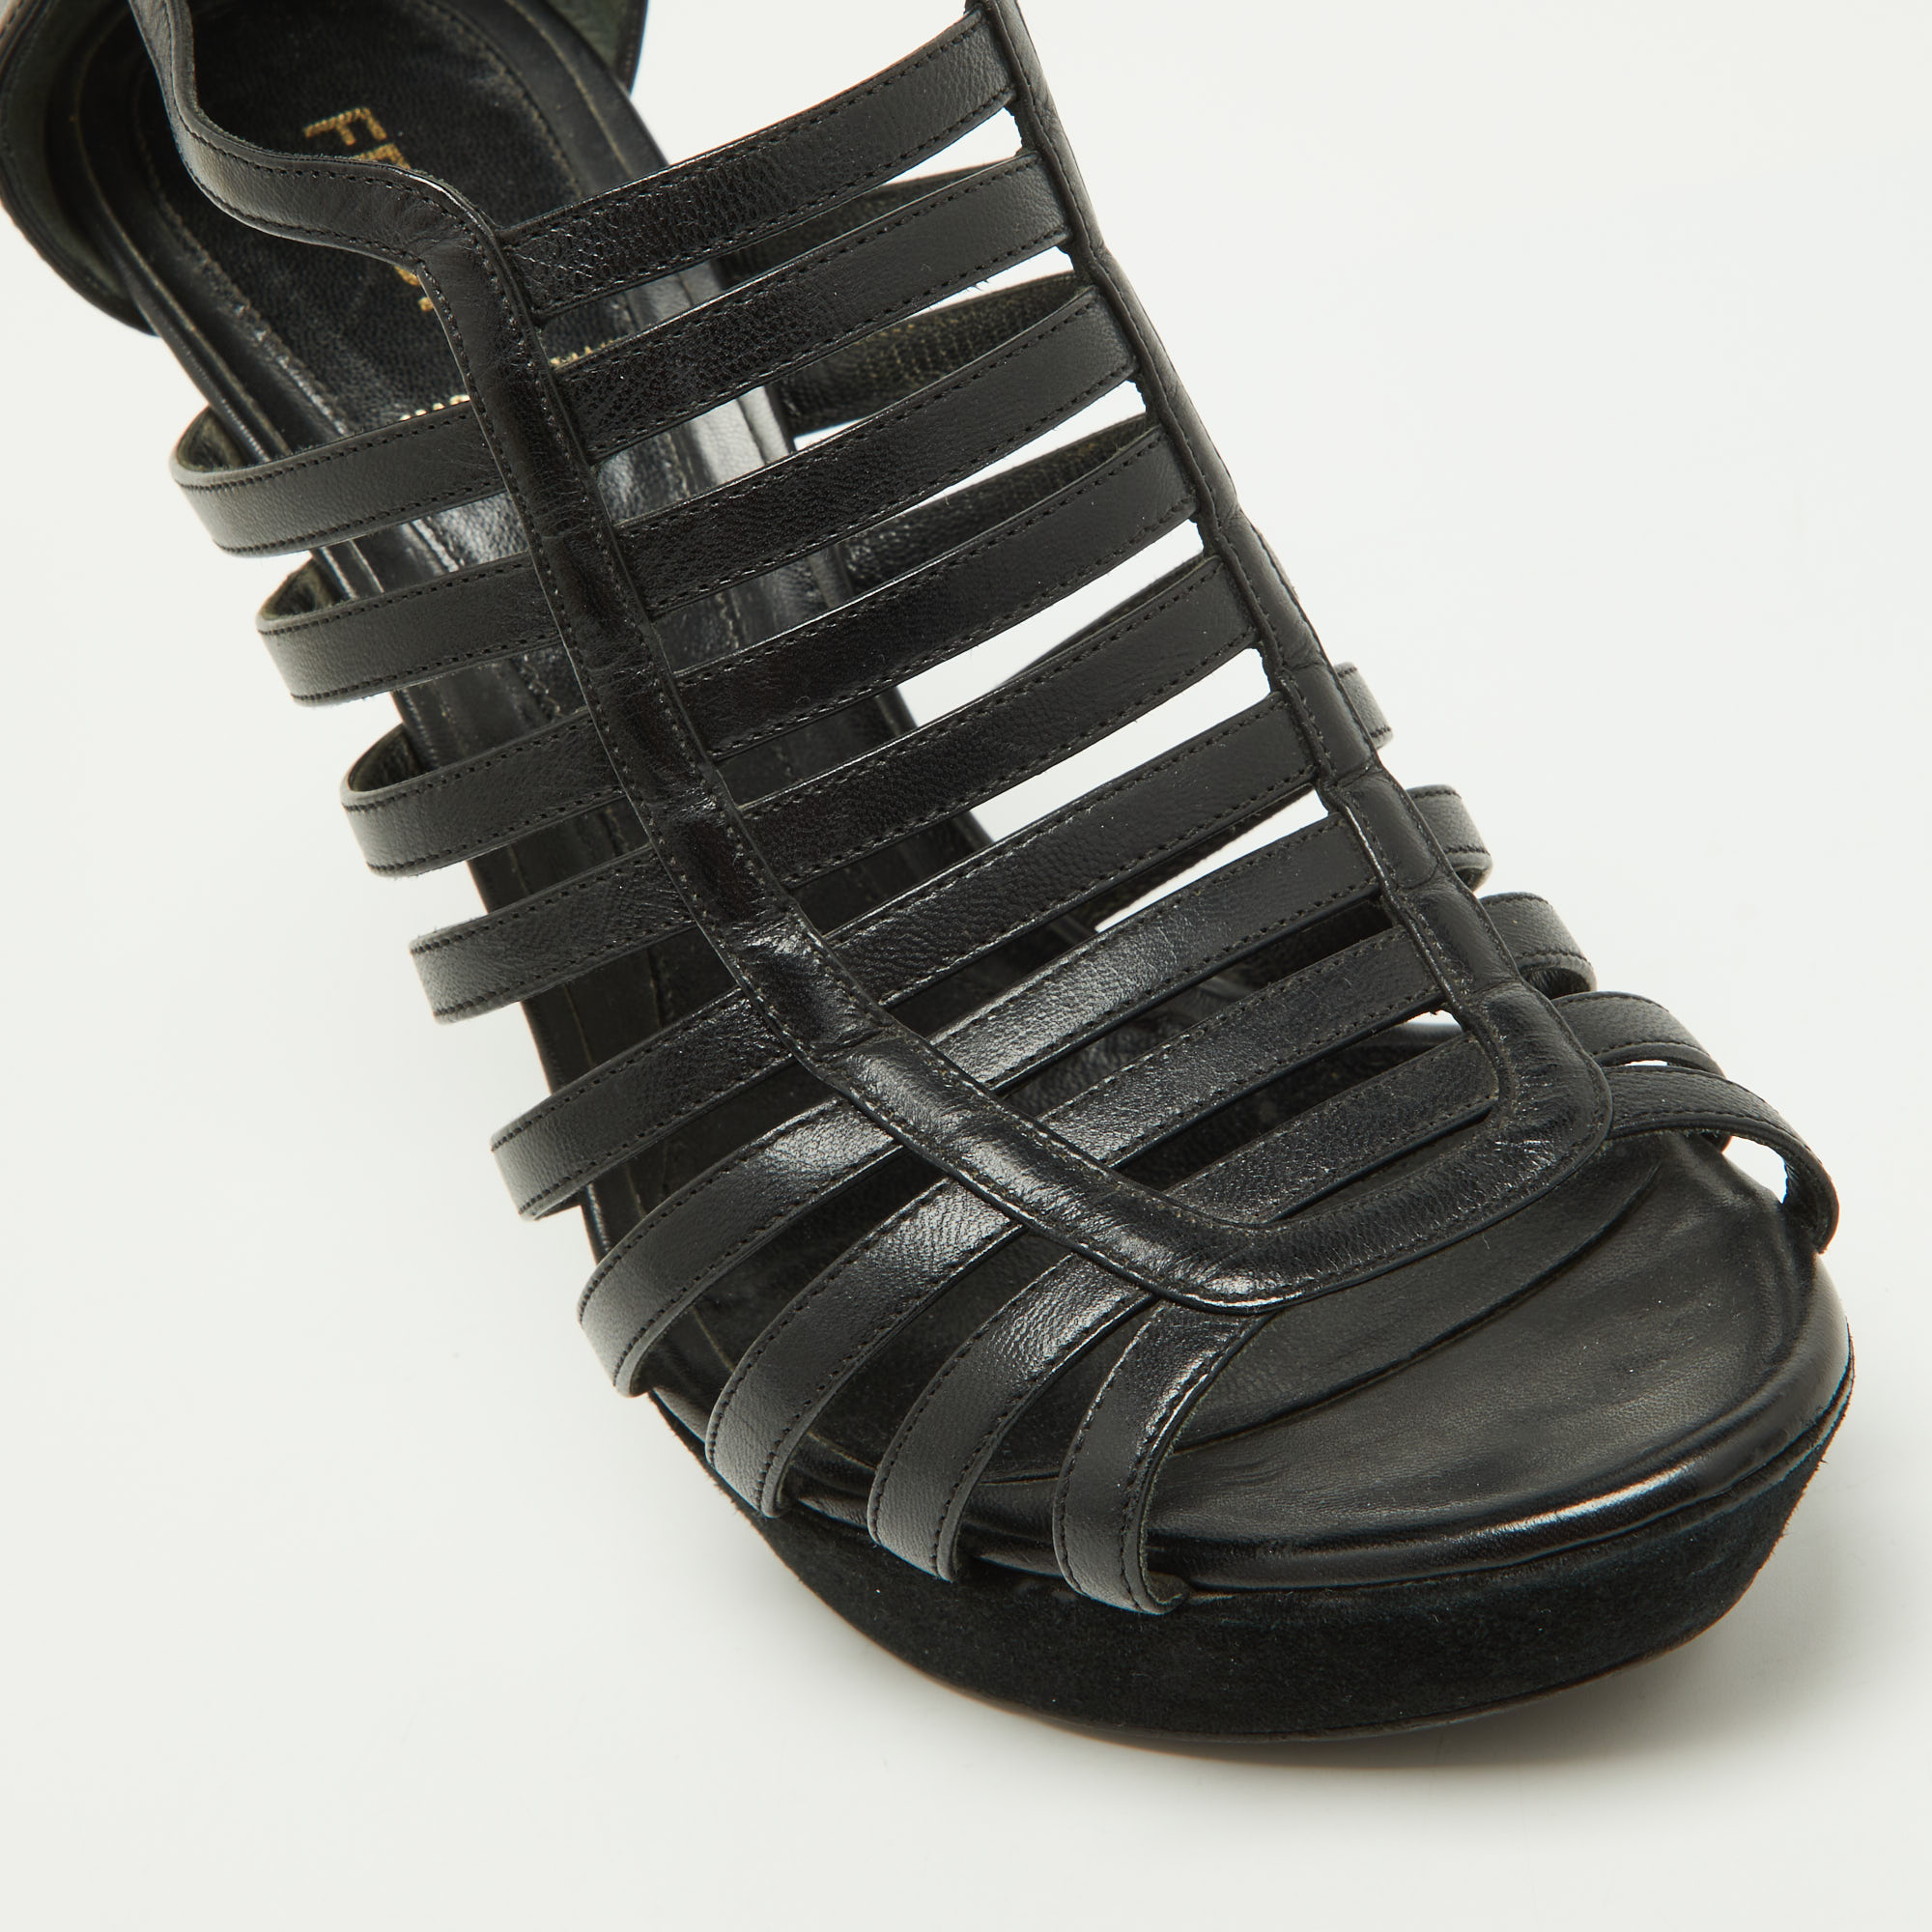 Fendi Black Leather Strappy Platform Sandals Size 39.5